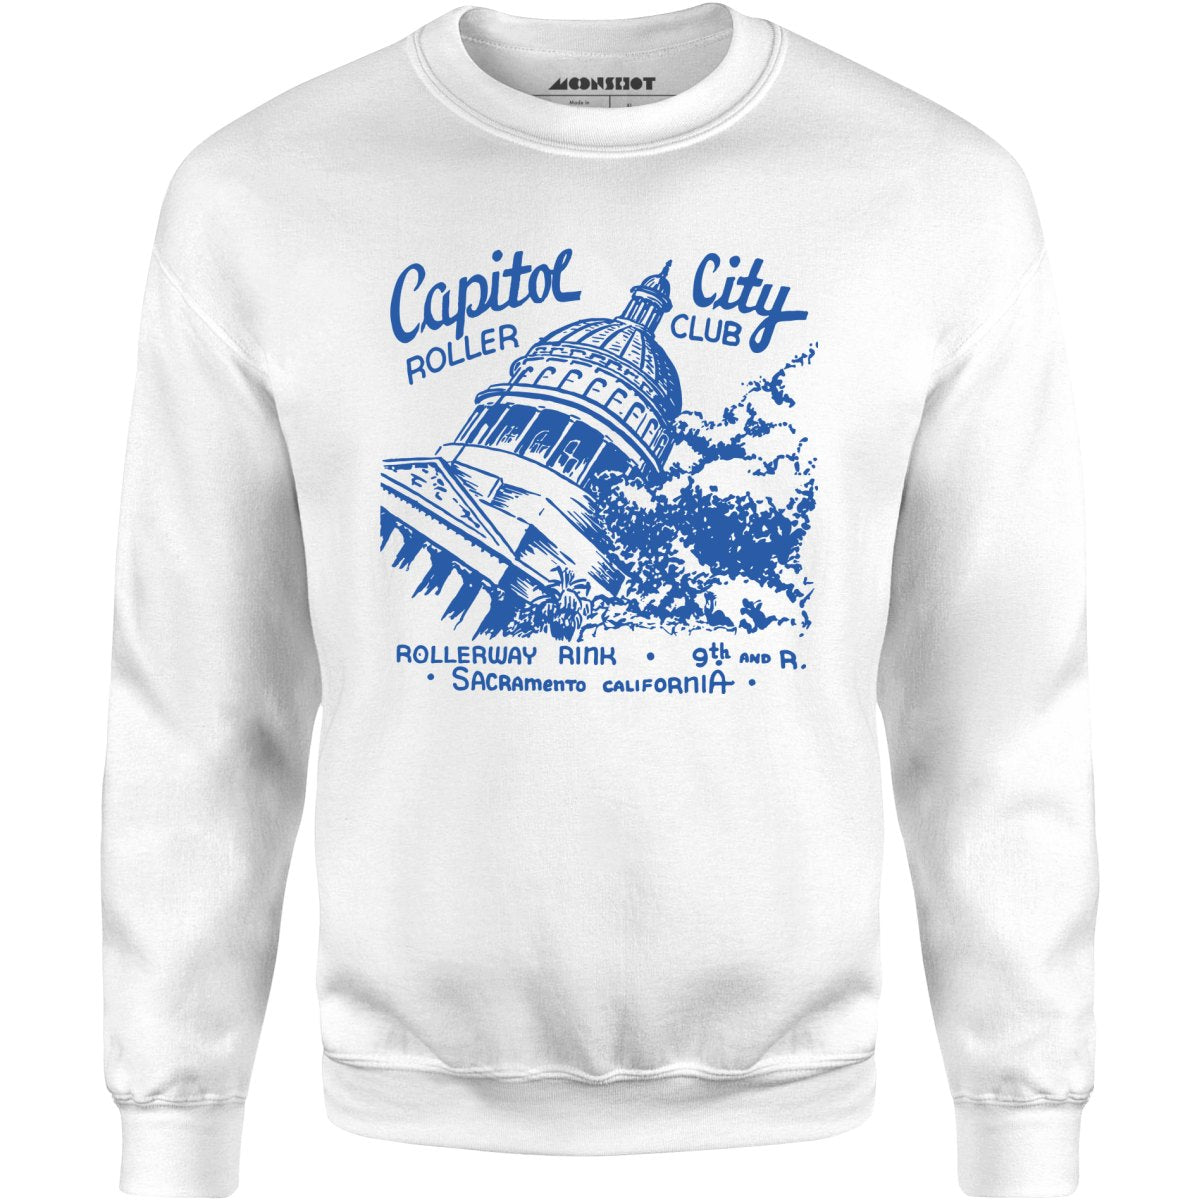 Capitol City Roller Club - Sacramento, CA - Vintage Roller Rink - Unisex Sweatshirt